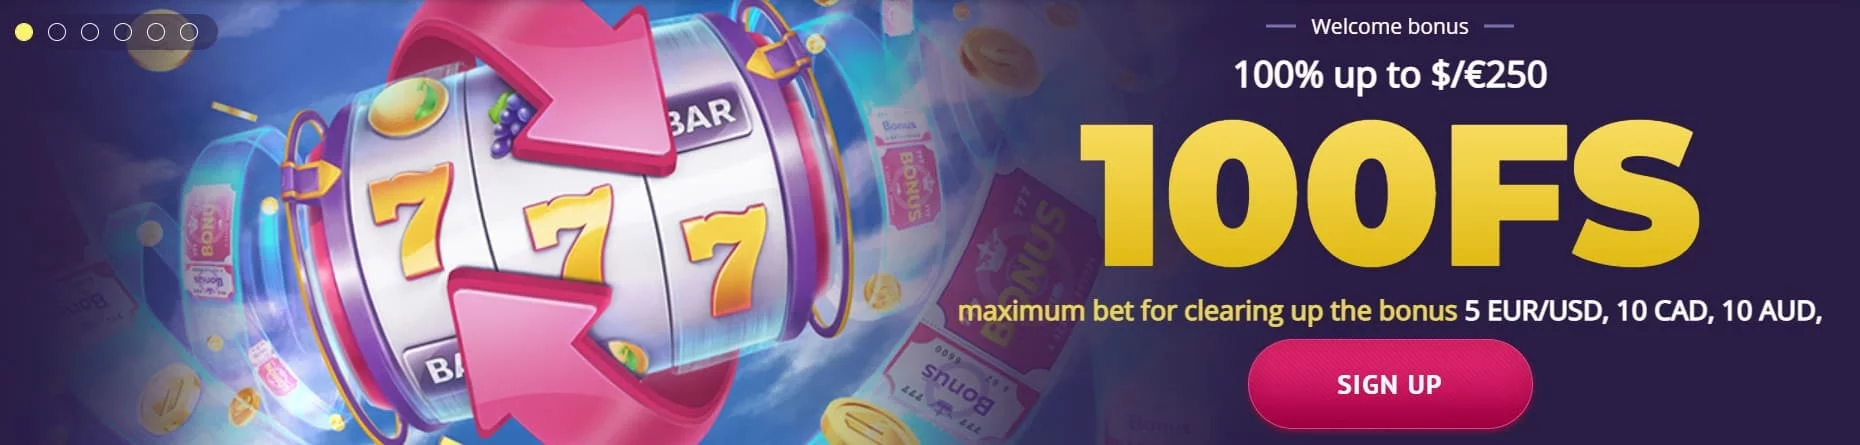 slotum casino welcome bonus 2021